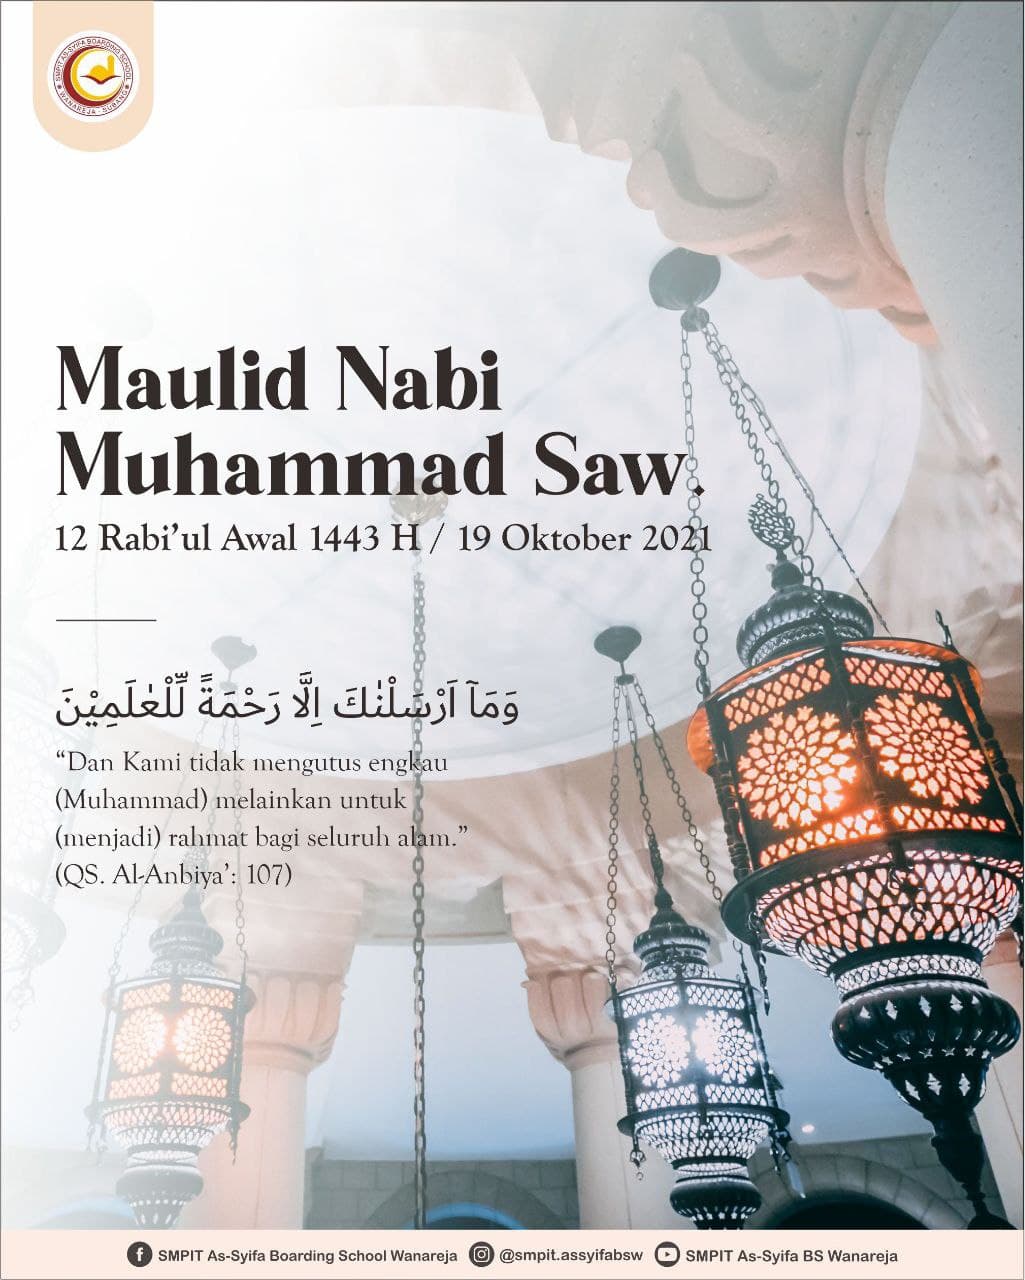 Maulid Nabi Muhammad saw